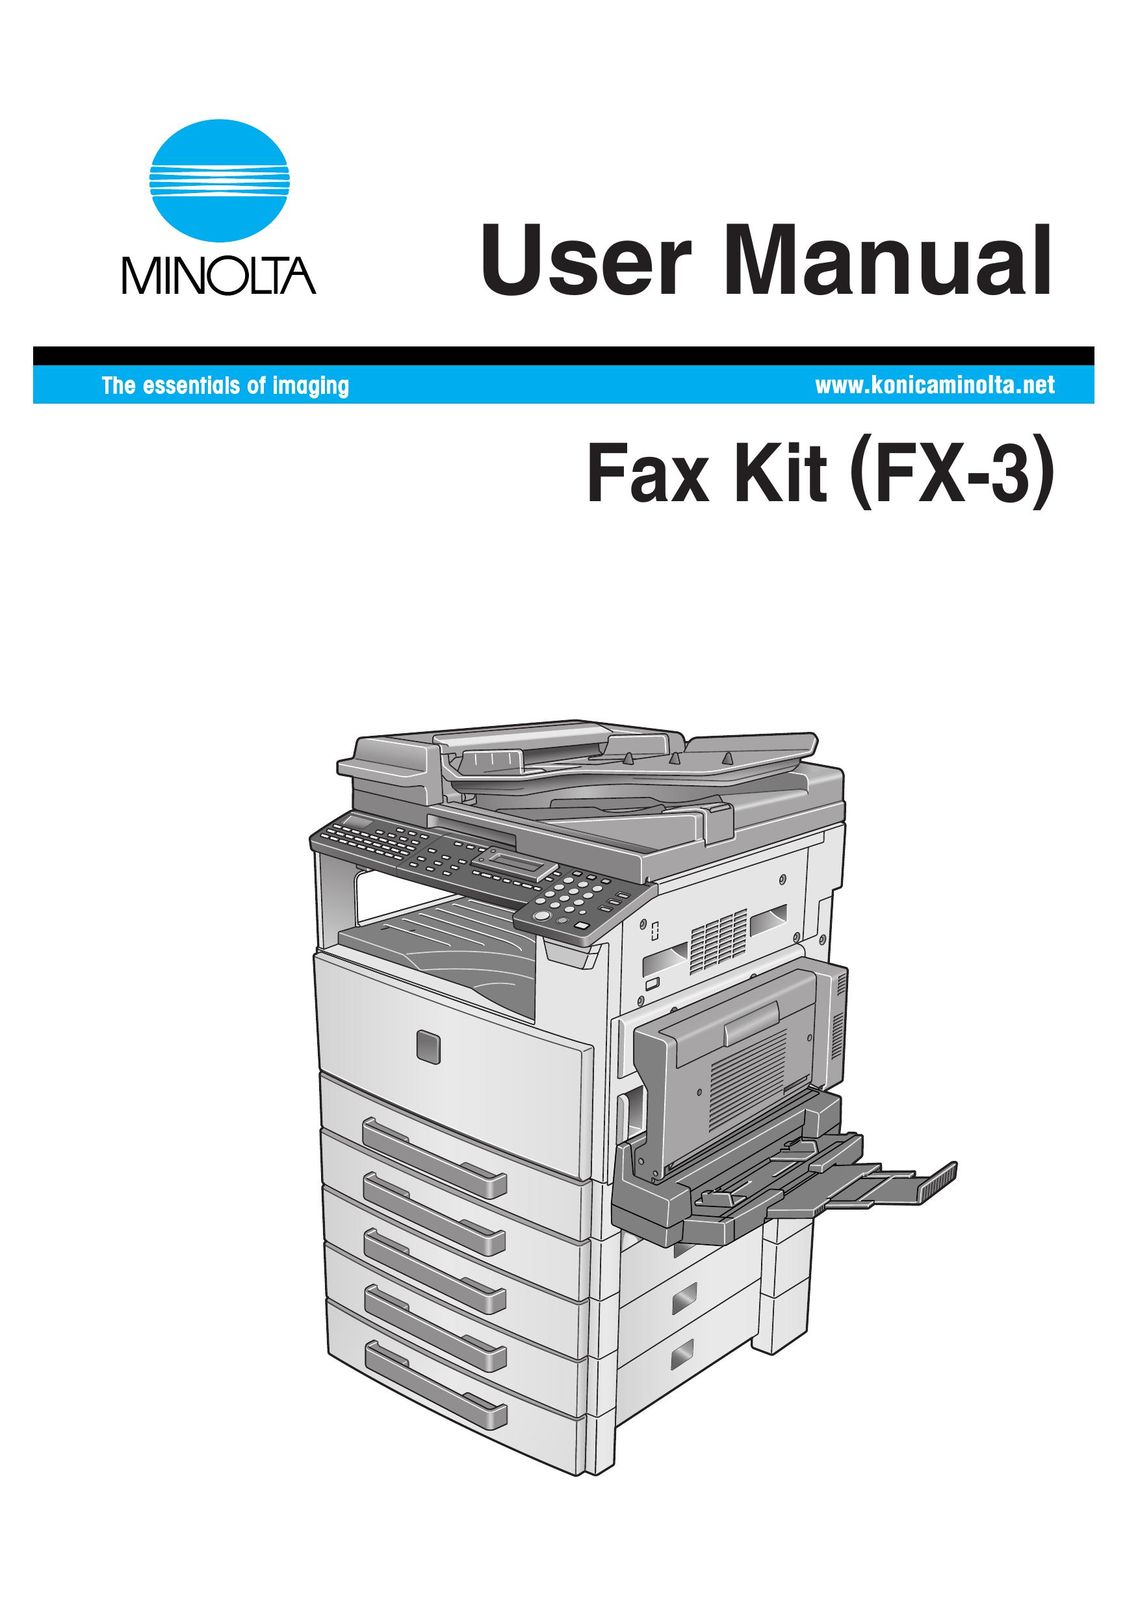 Konica Minolta (FX-3) Fax Machine User Manual